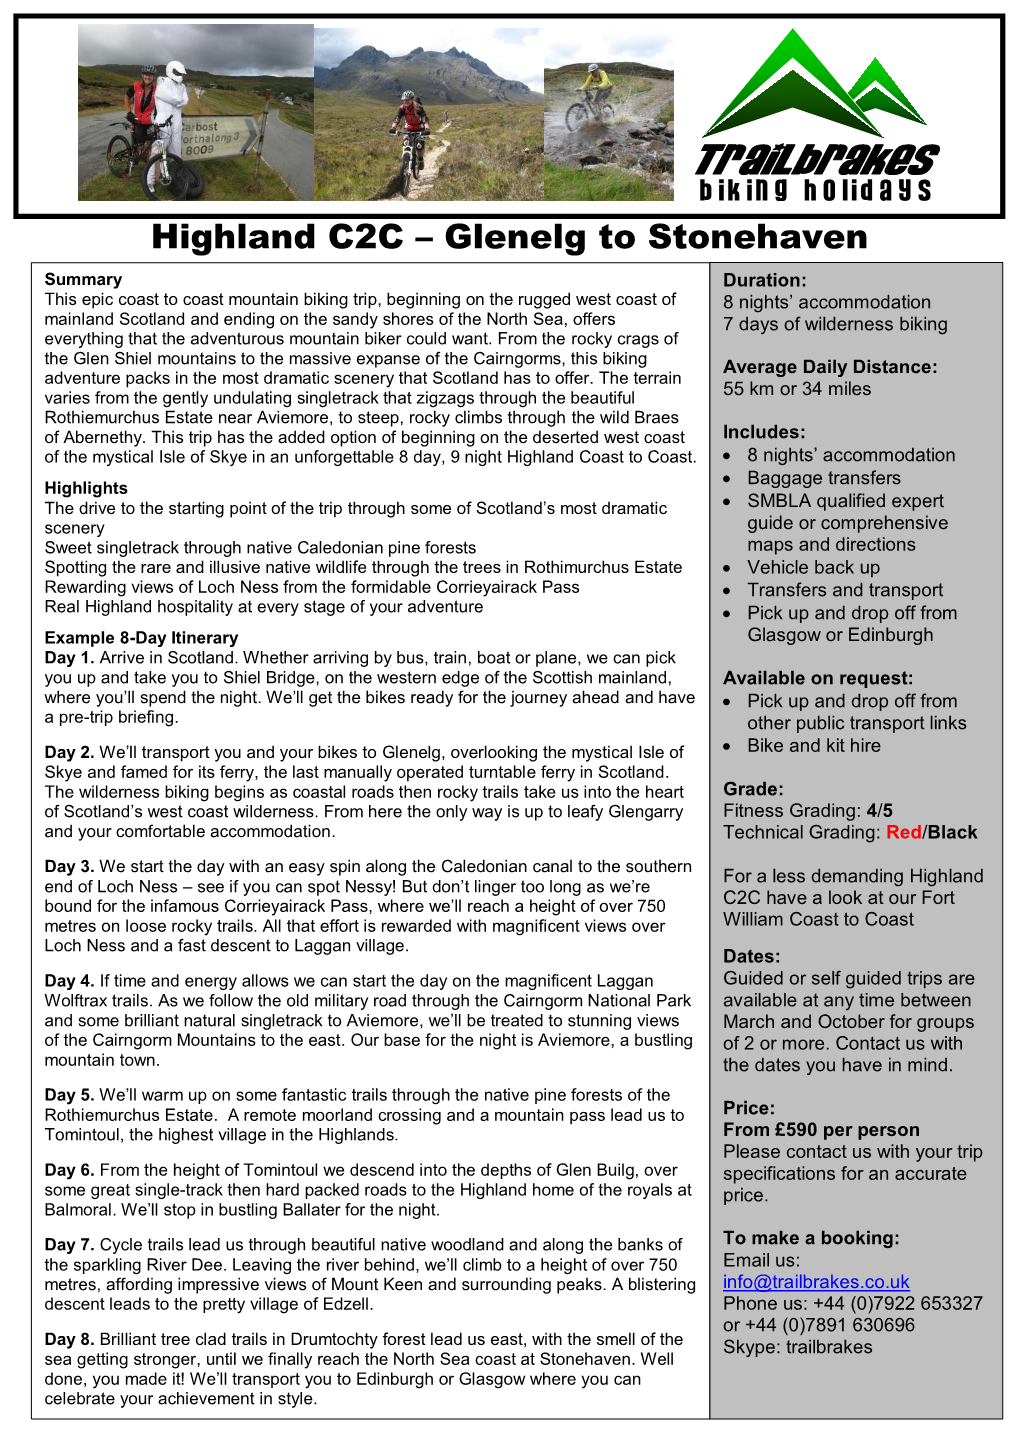 Highland C2C – Glenelg to Stonehaven 7 Stanes Skills Weekend